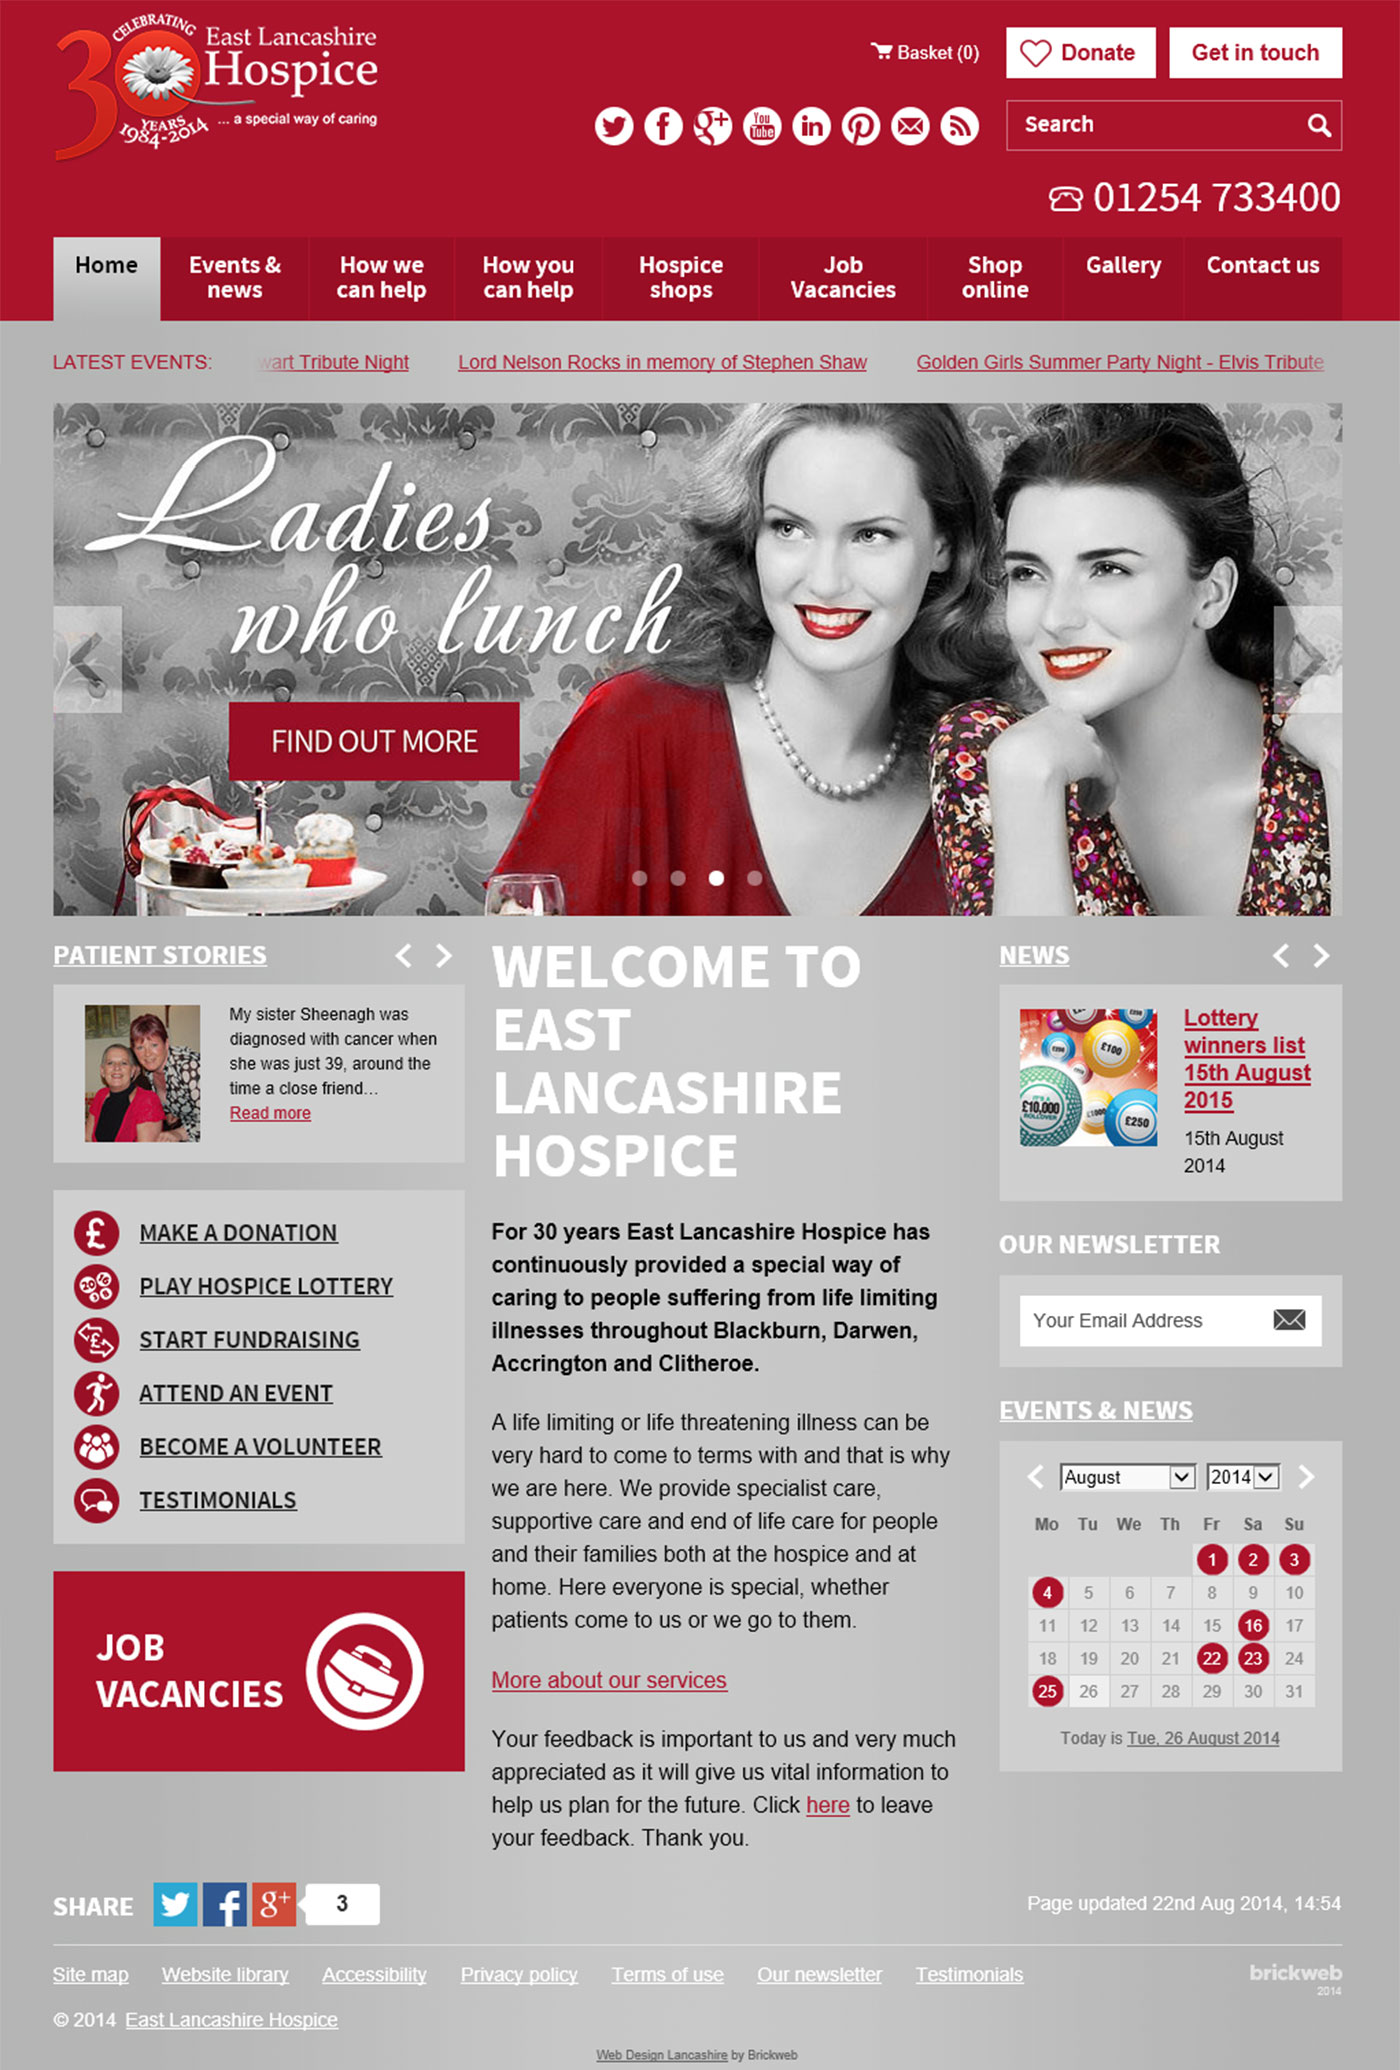 East Lancashire Hospice (2014) Home page